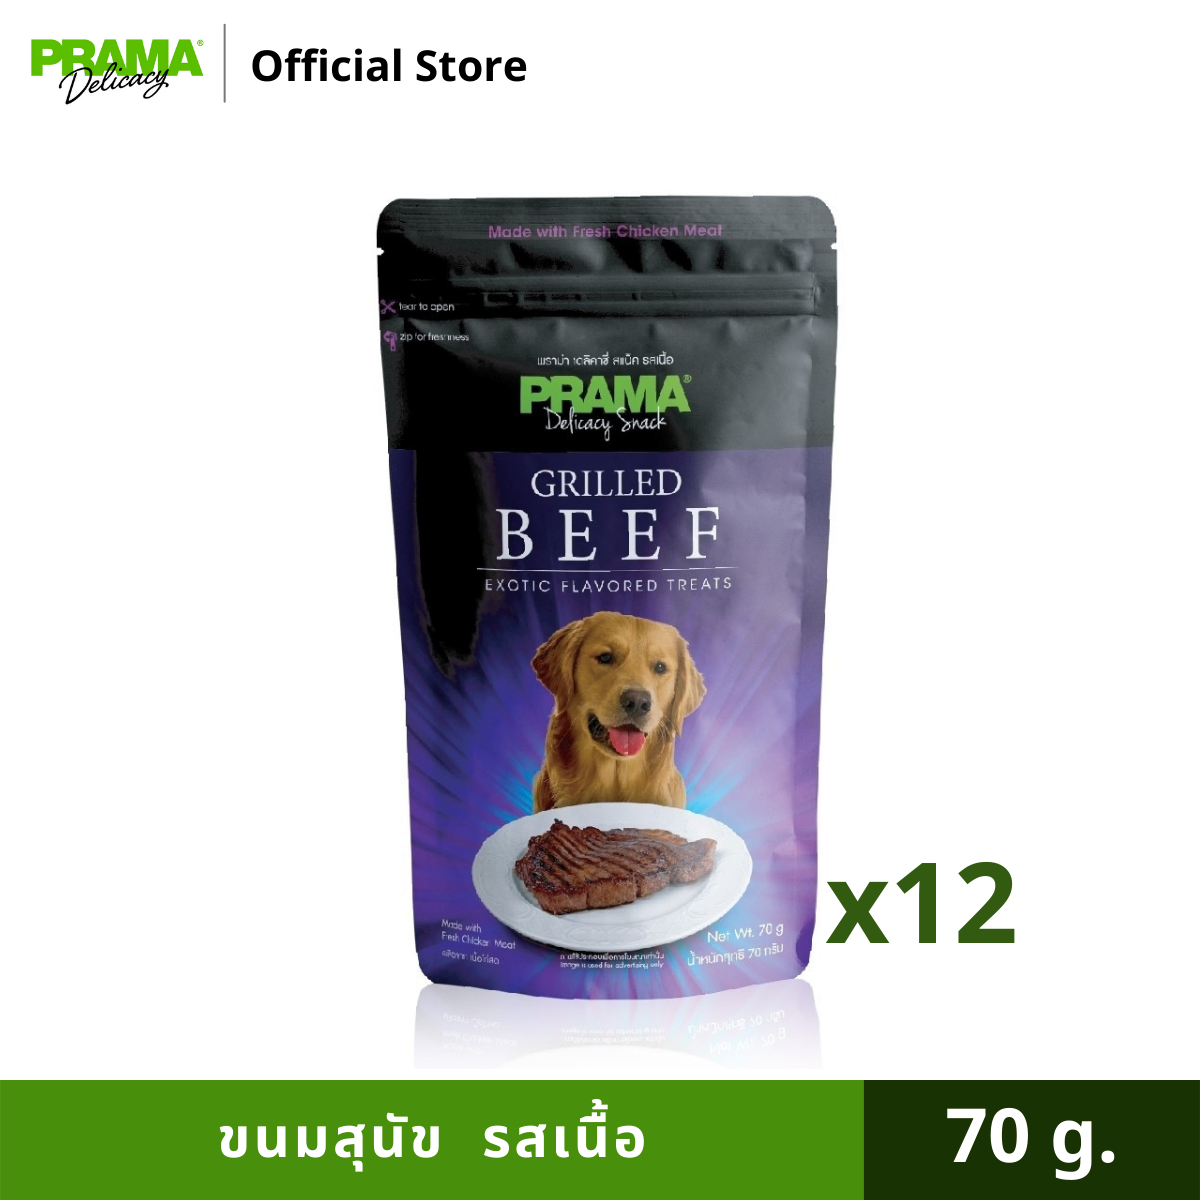 PRAMA Delicacy พราม่า เดลิคาซี่ รสเนื้อ ขนมสุนัข ขนาด 70 กรัม - 12 ซอง / Box